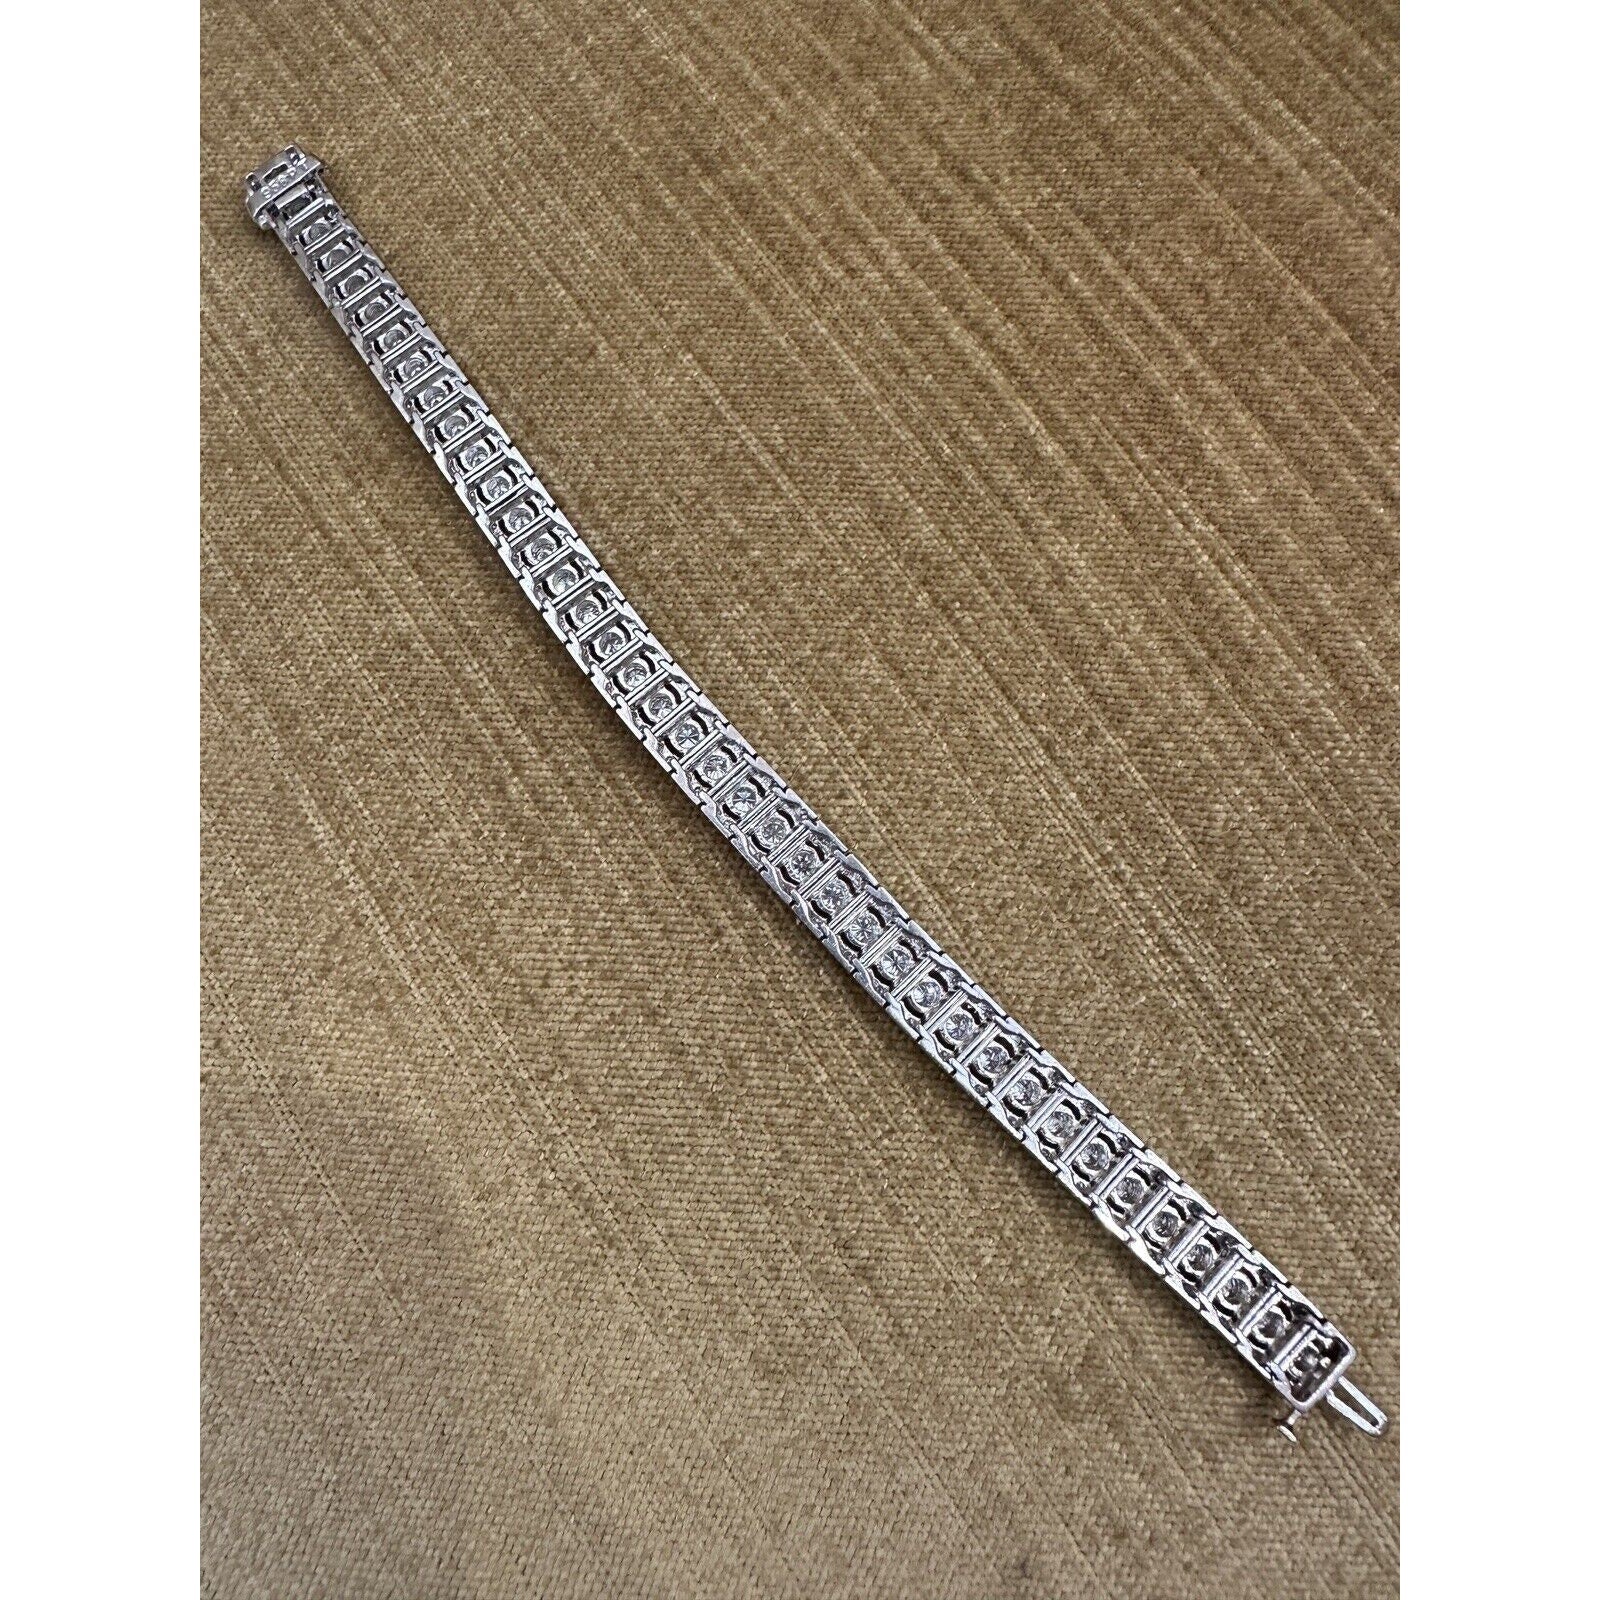 Vintage Diamond Link Bracelet 6.00cts in Platinum - HM2449EB